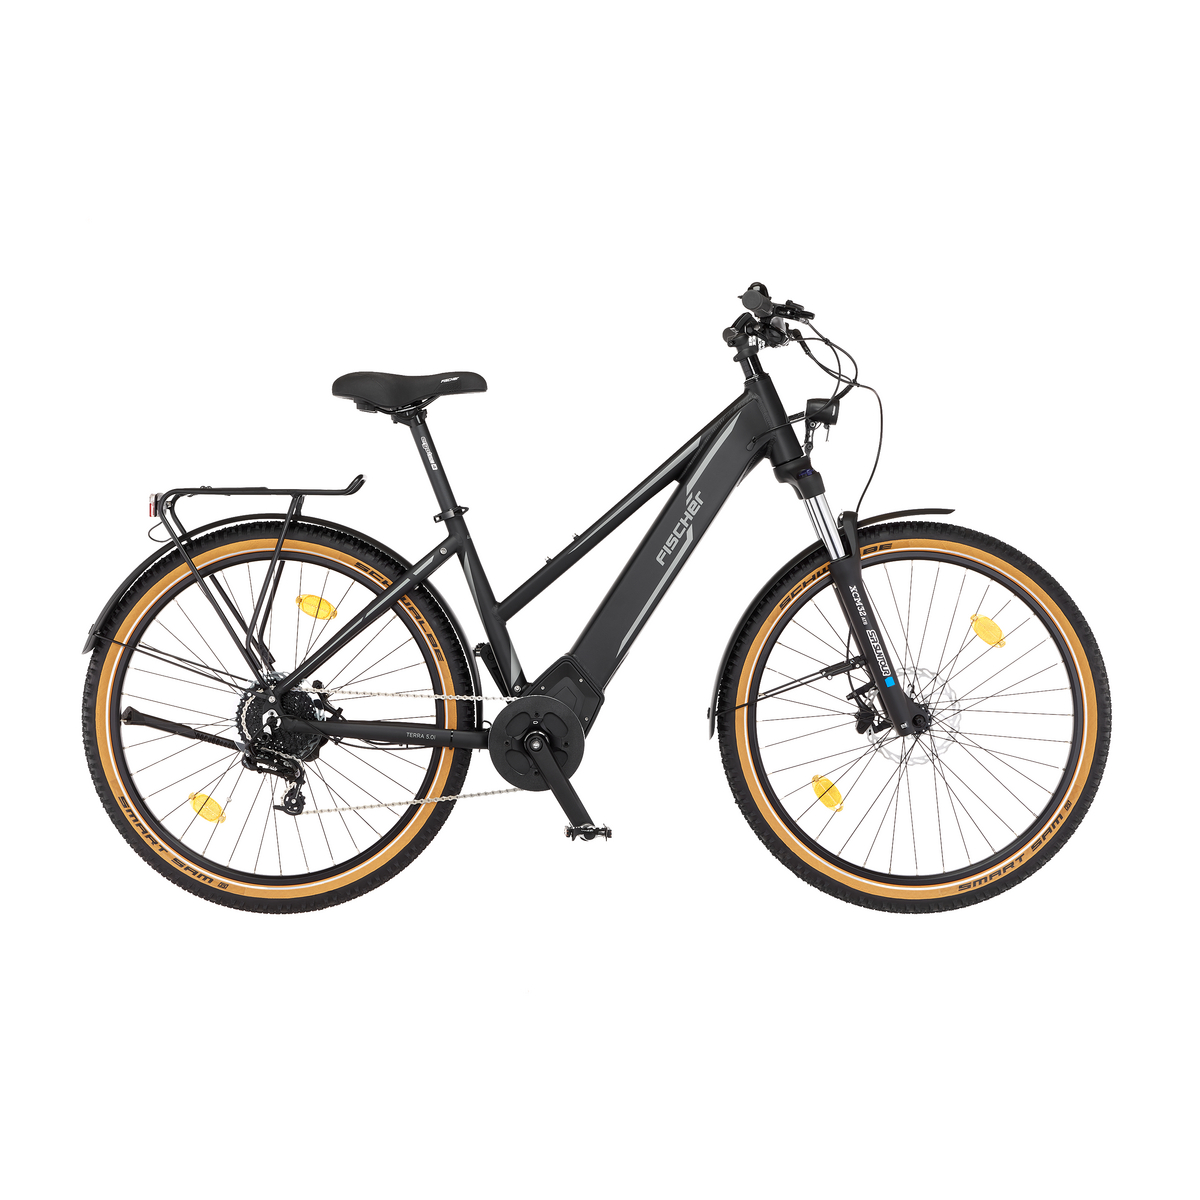 FISCHER E-Bike ATB TERRA 5.0i, schwarz matt, 27,5 Zoll, RH 44 cm, 504 Wh | E-Bikes & Pedelecs